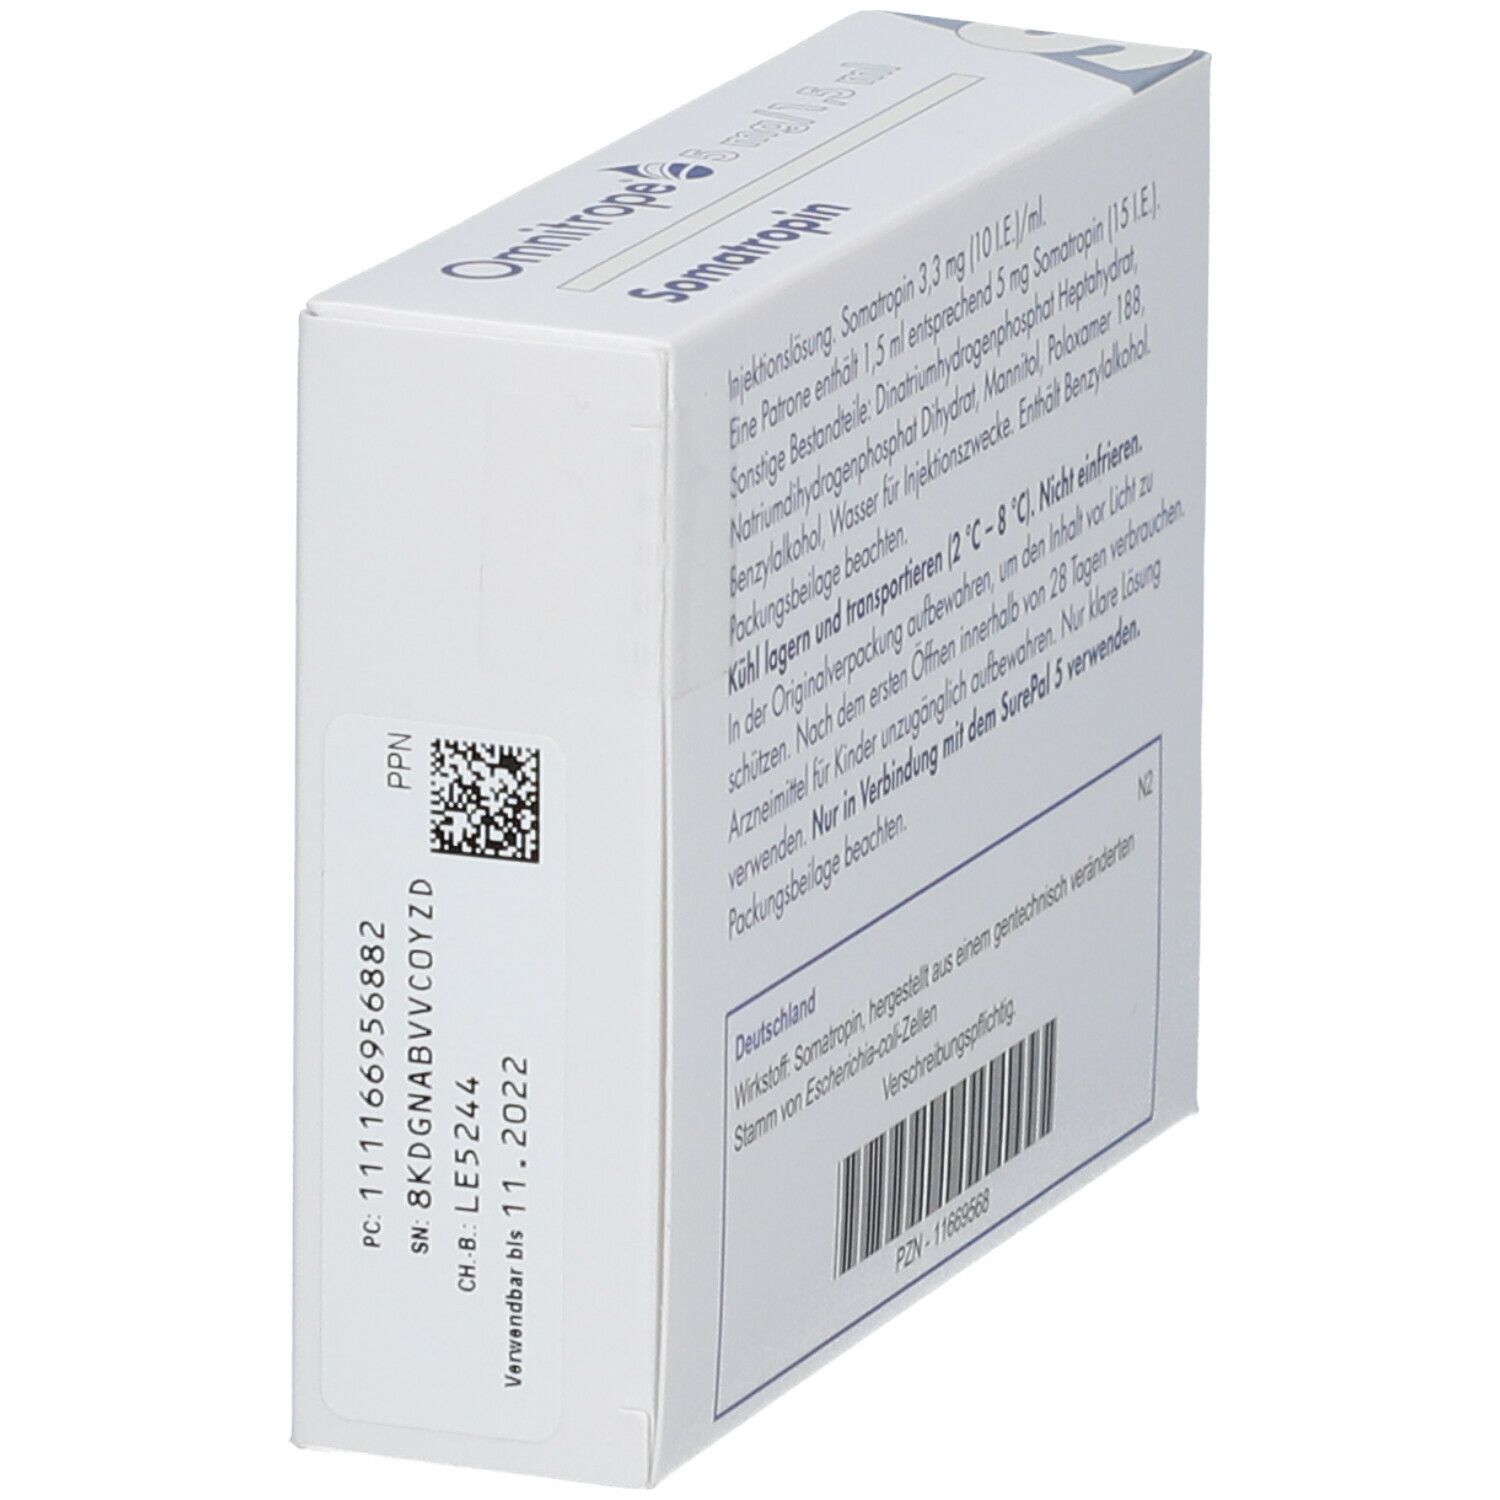 Omnitrope 5 mg/1,5 ml